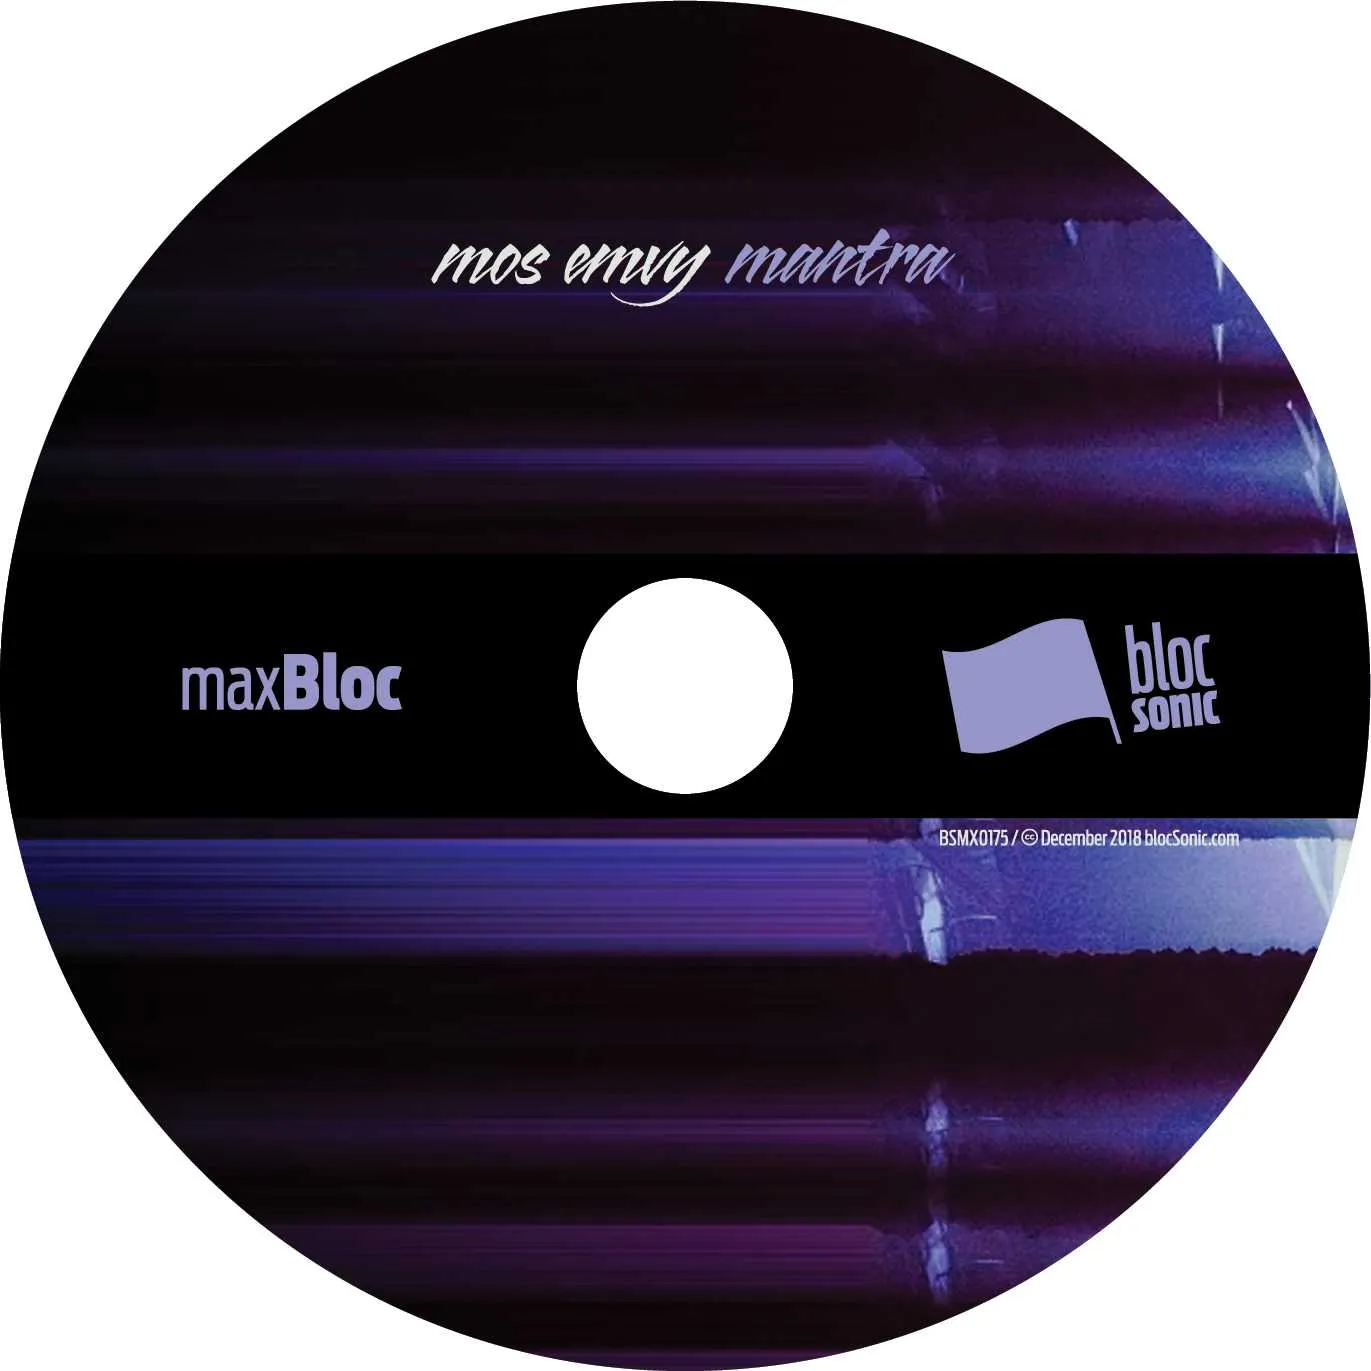 Album disc for “Mantra” by Mos Emvy